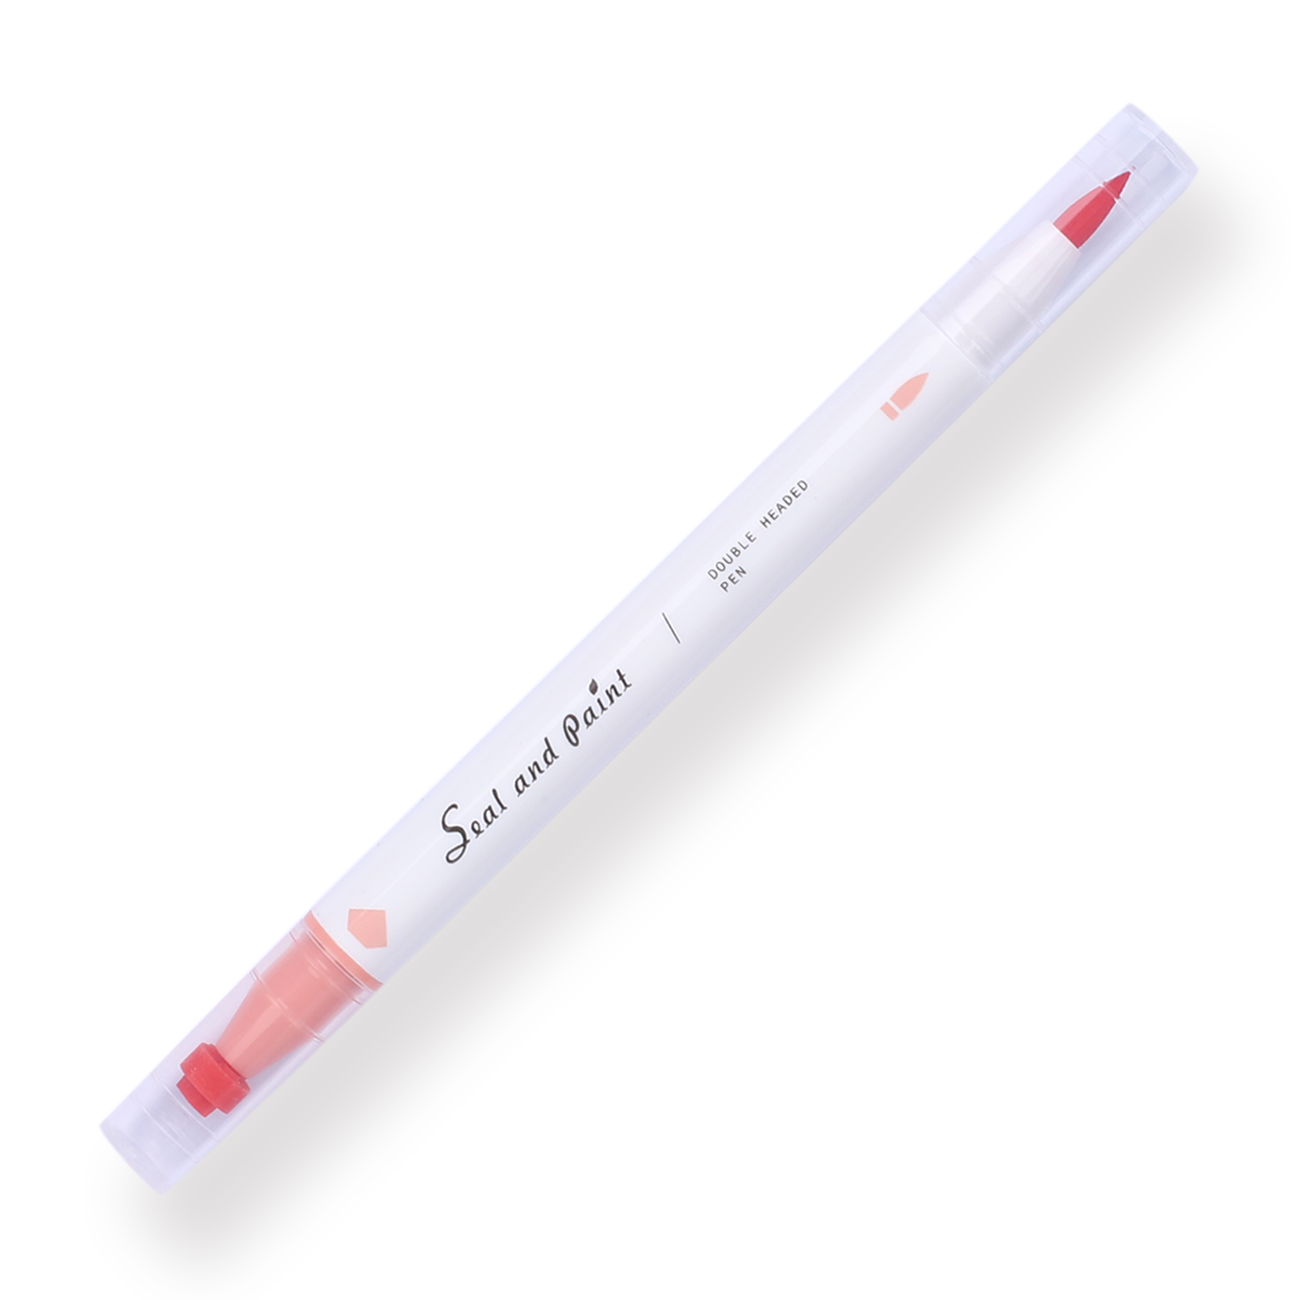 Double-Sided Marker Pen Set - Stamp / Line - Warm Color - Stationery Pal